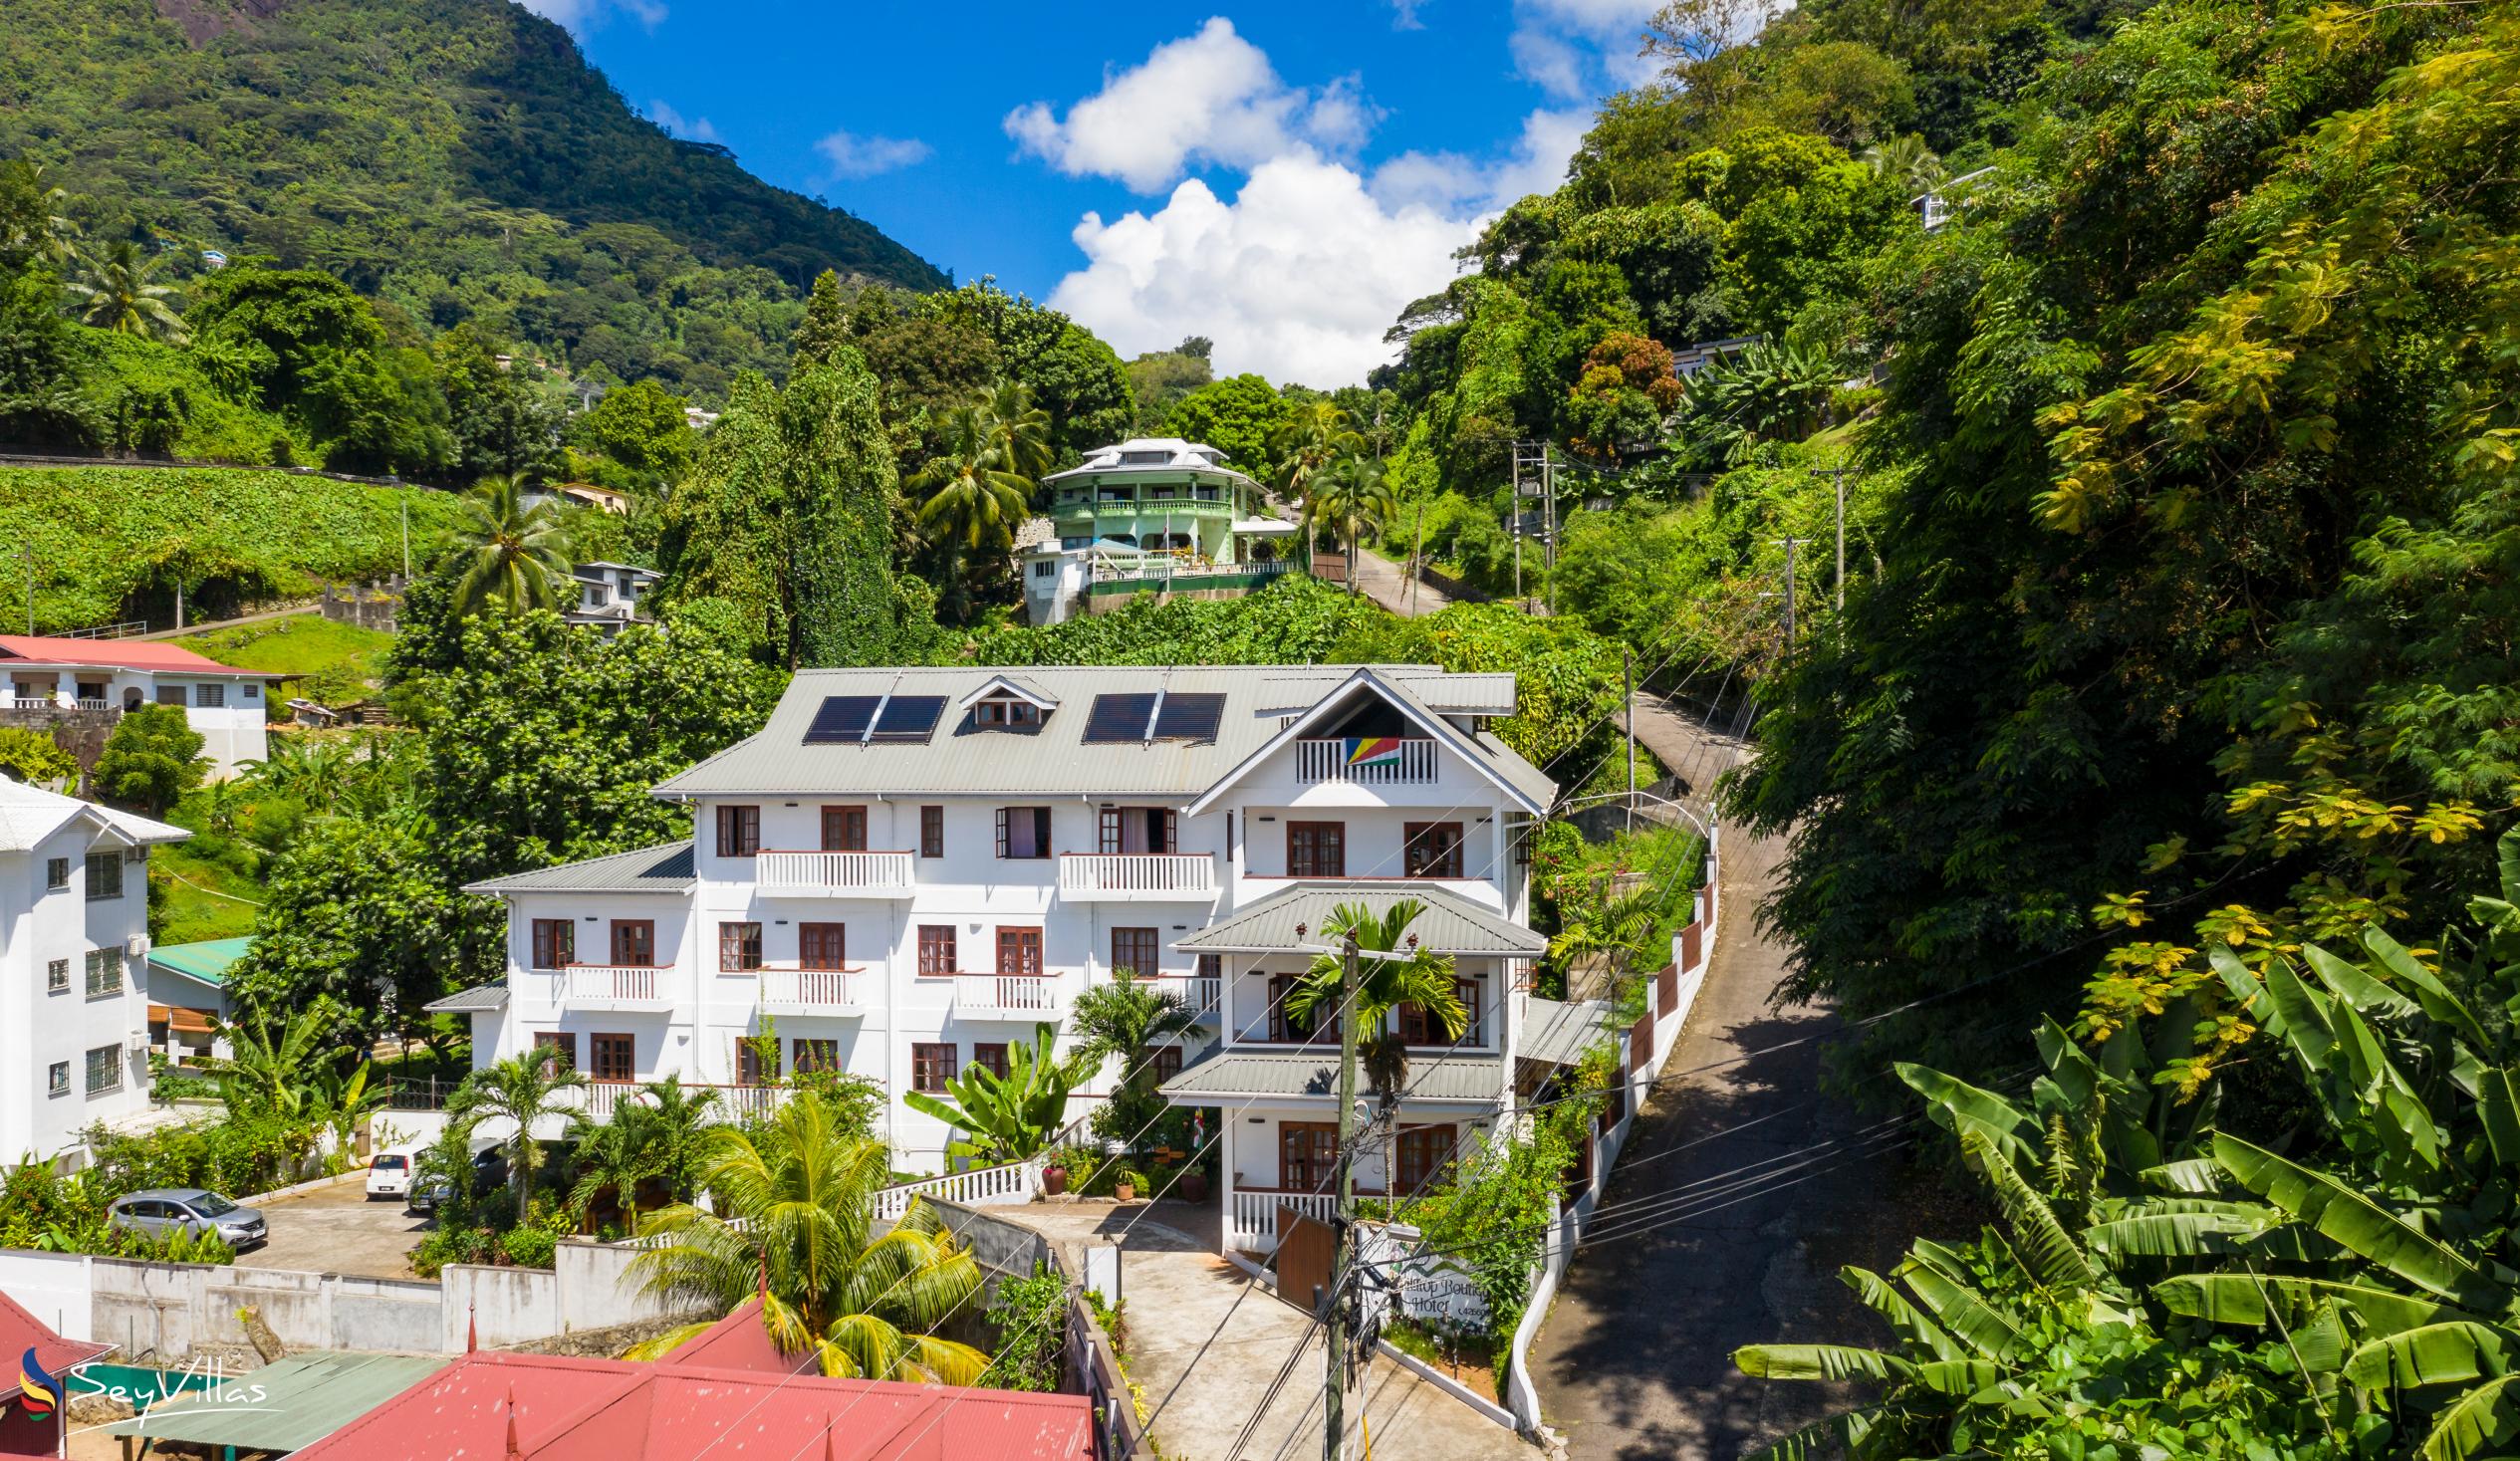 Photo 1: Hilltop Boutique Hotel - Outdoor area - Mahé (Seychelles)